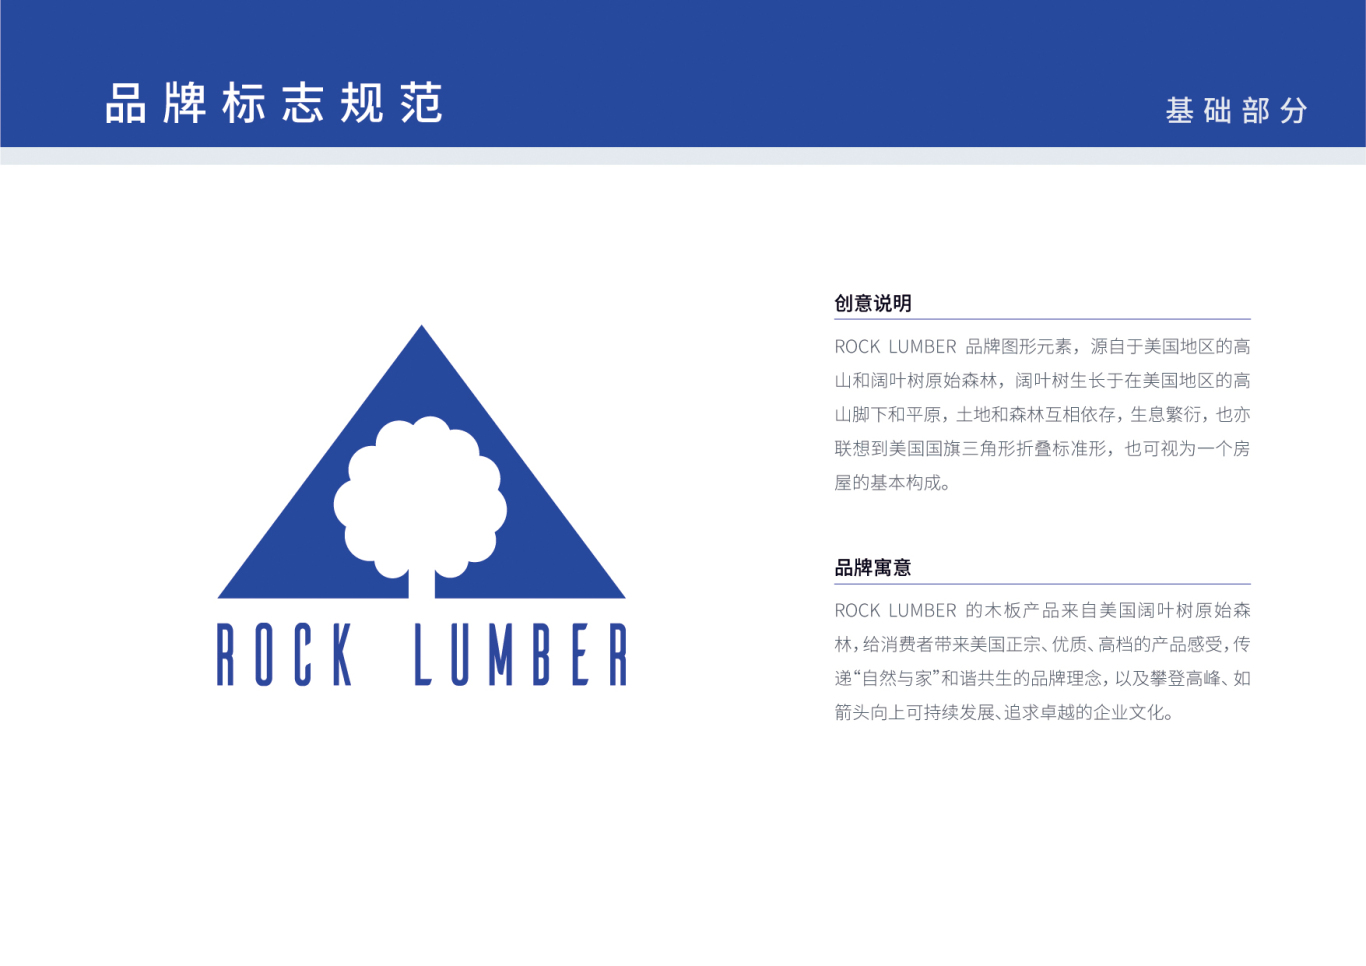 ROCK LUMBERR 標志設計圖2